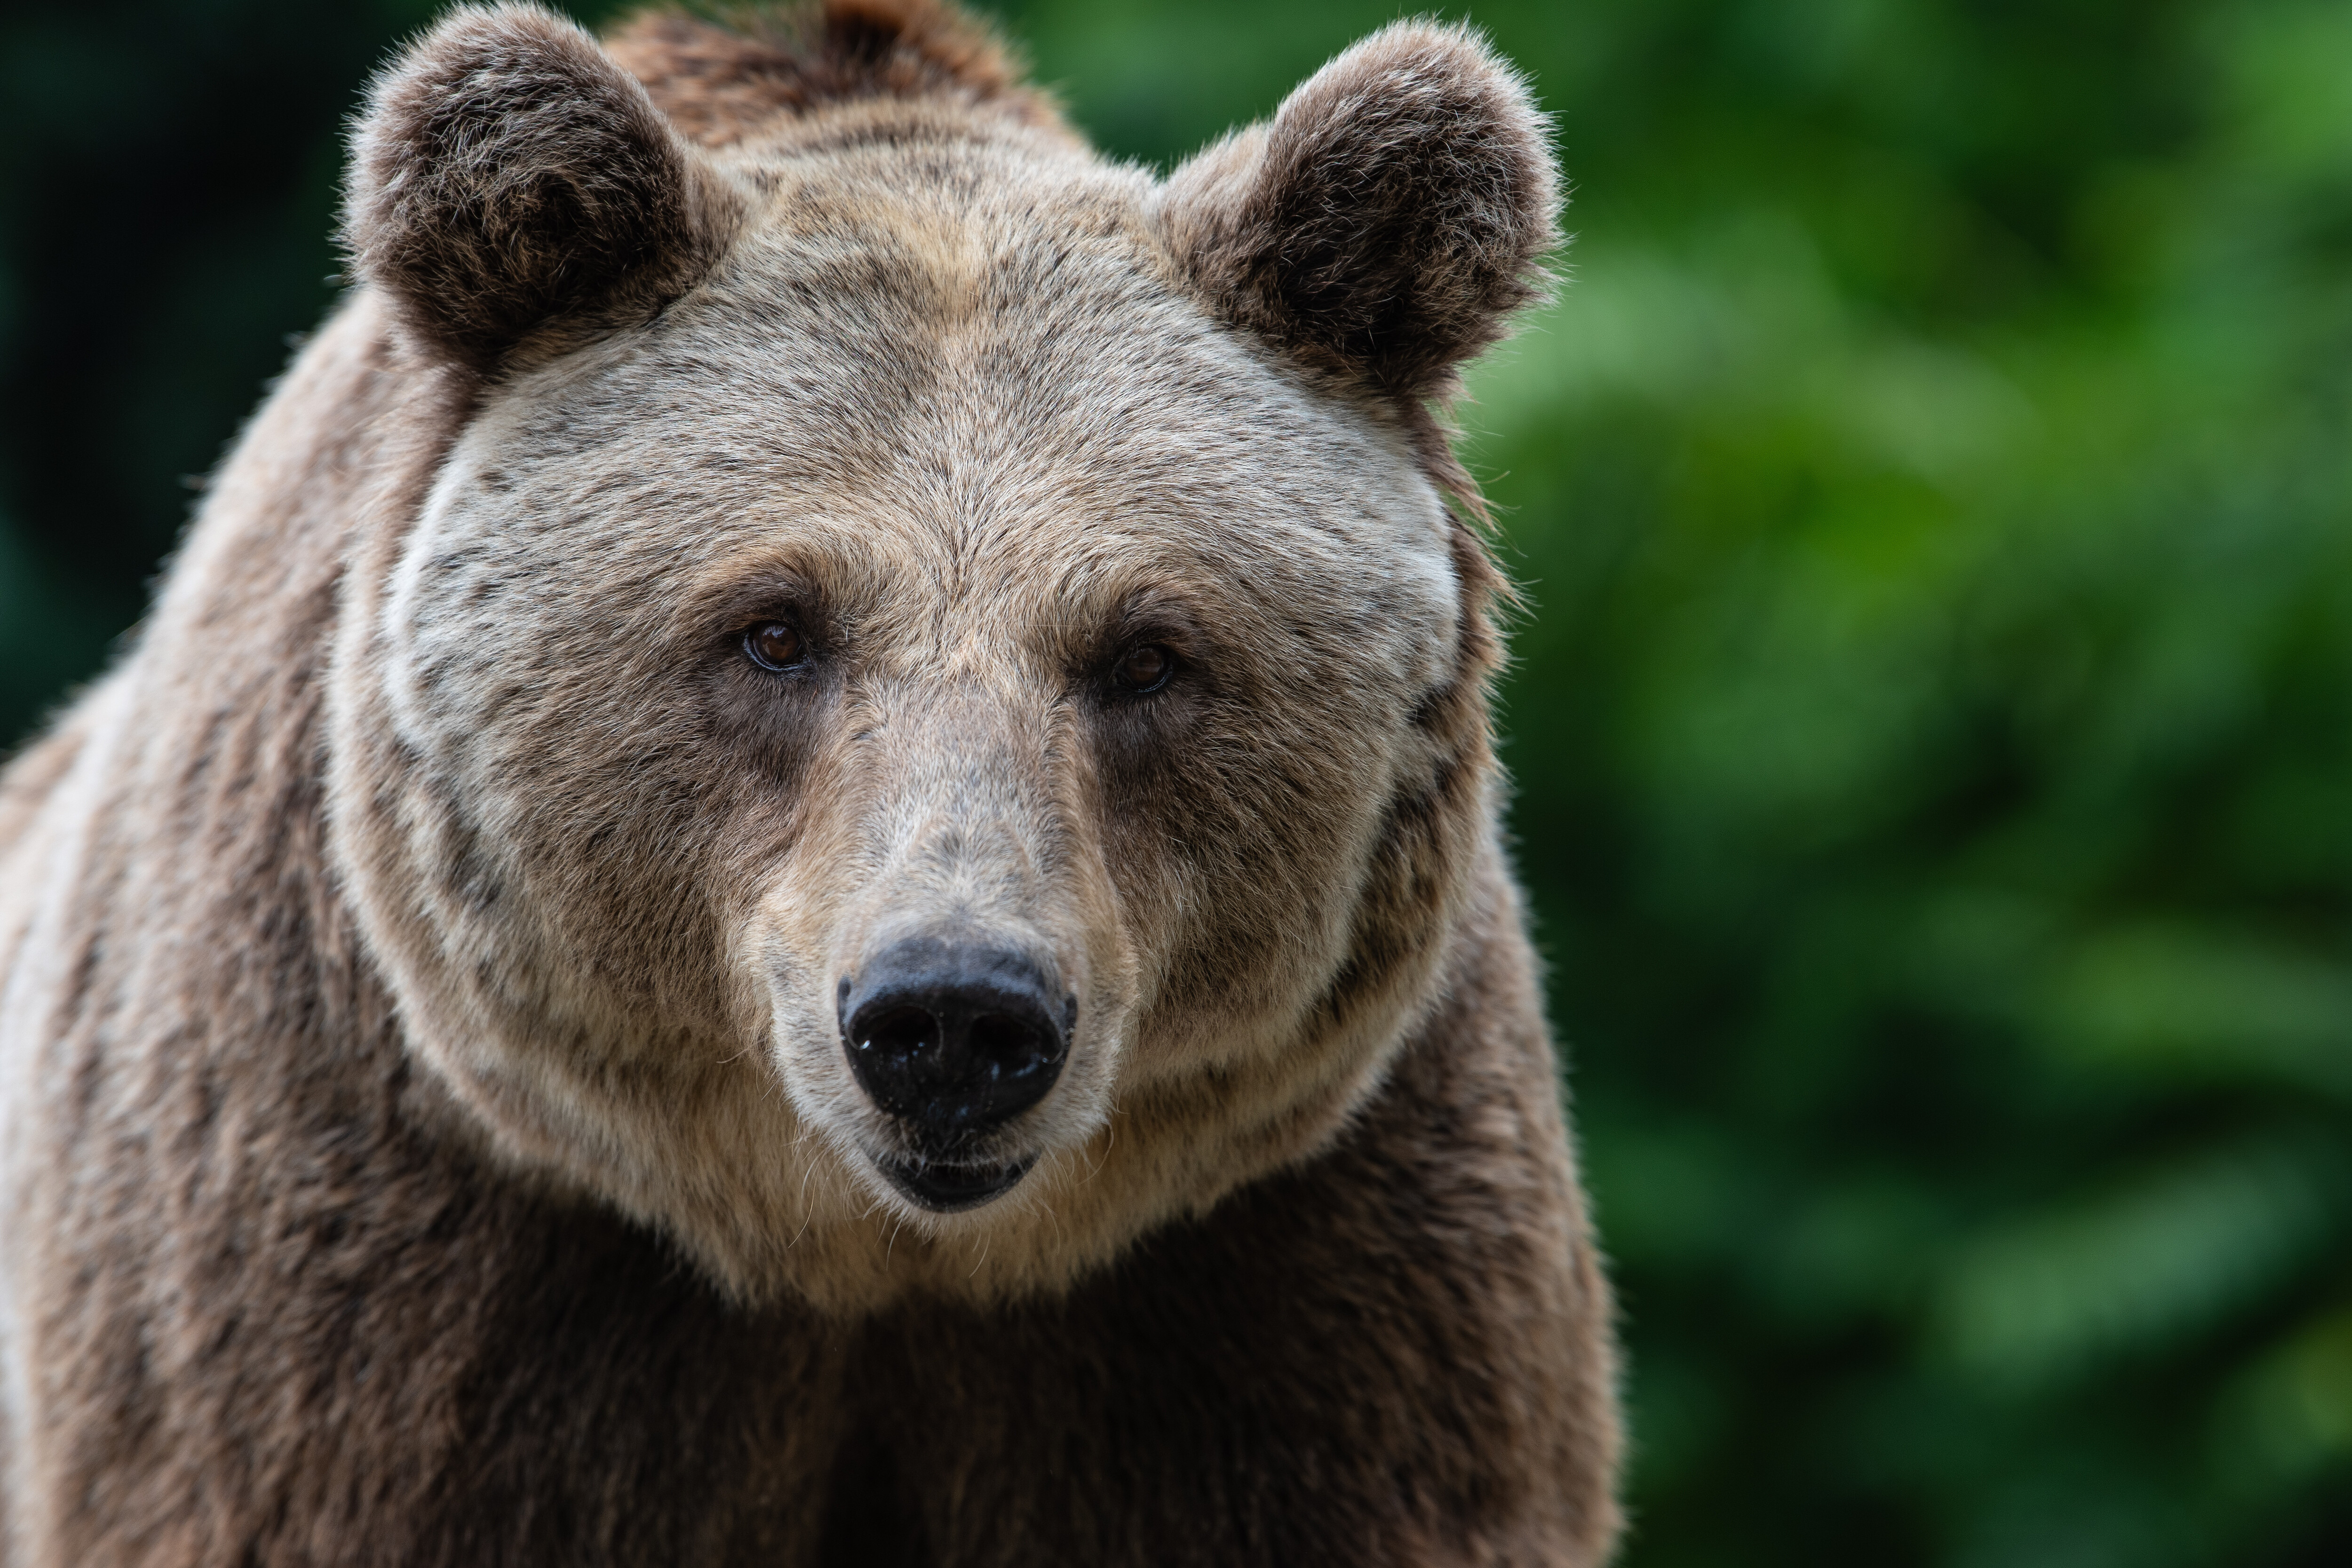 A brown bear (Ursus arctos) in its enclosure at Madrid Zoo...